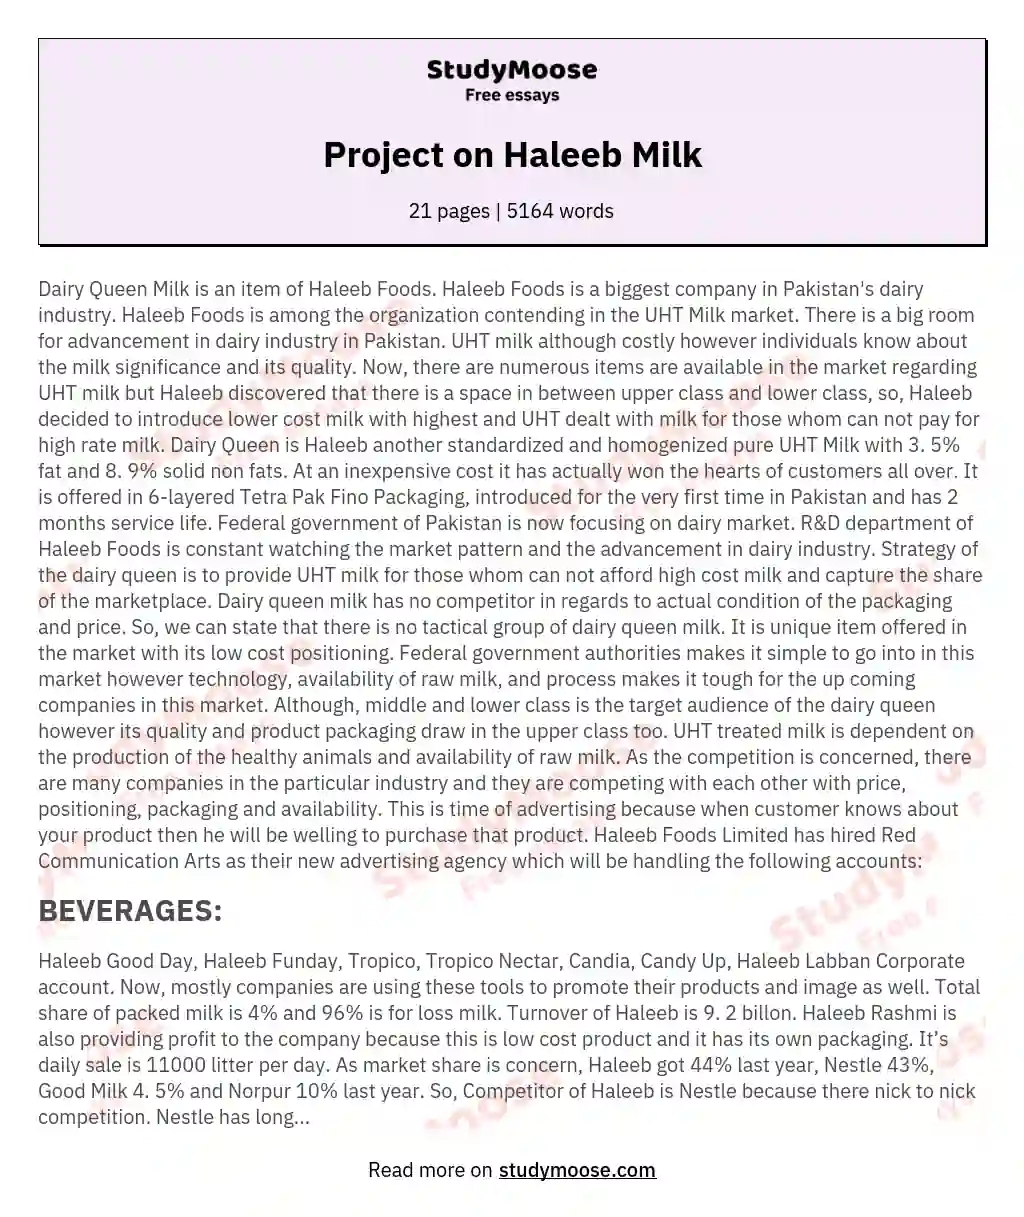 Project on Haleeb Milk essay